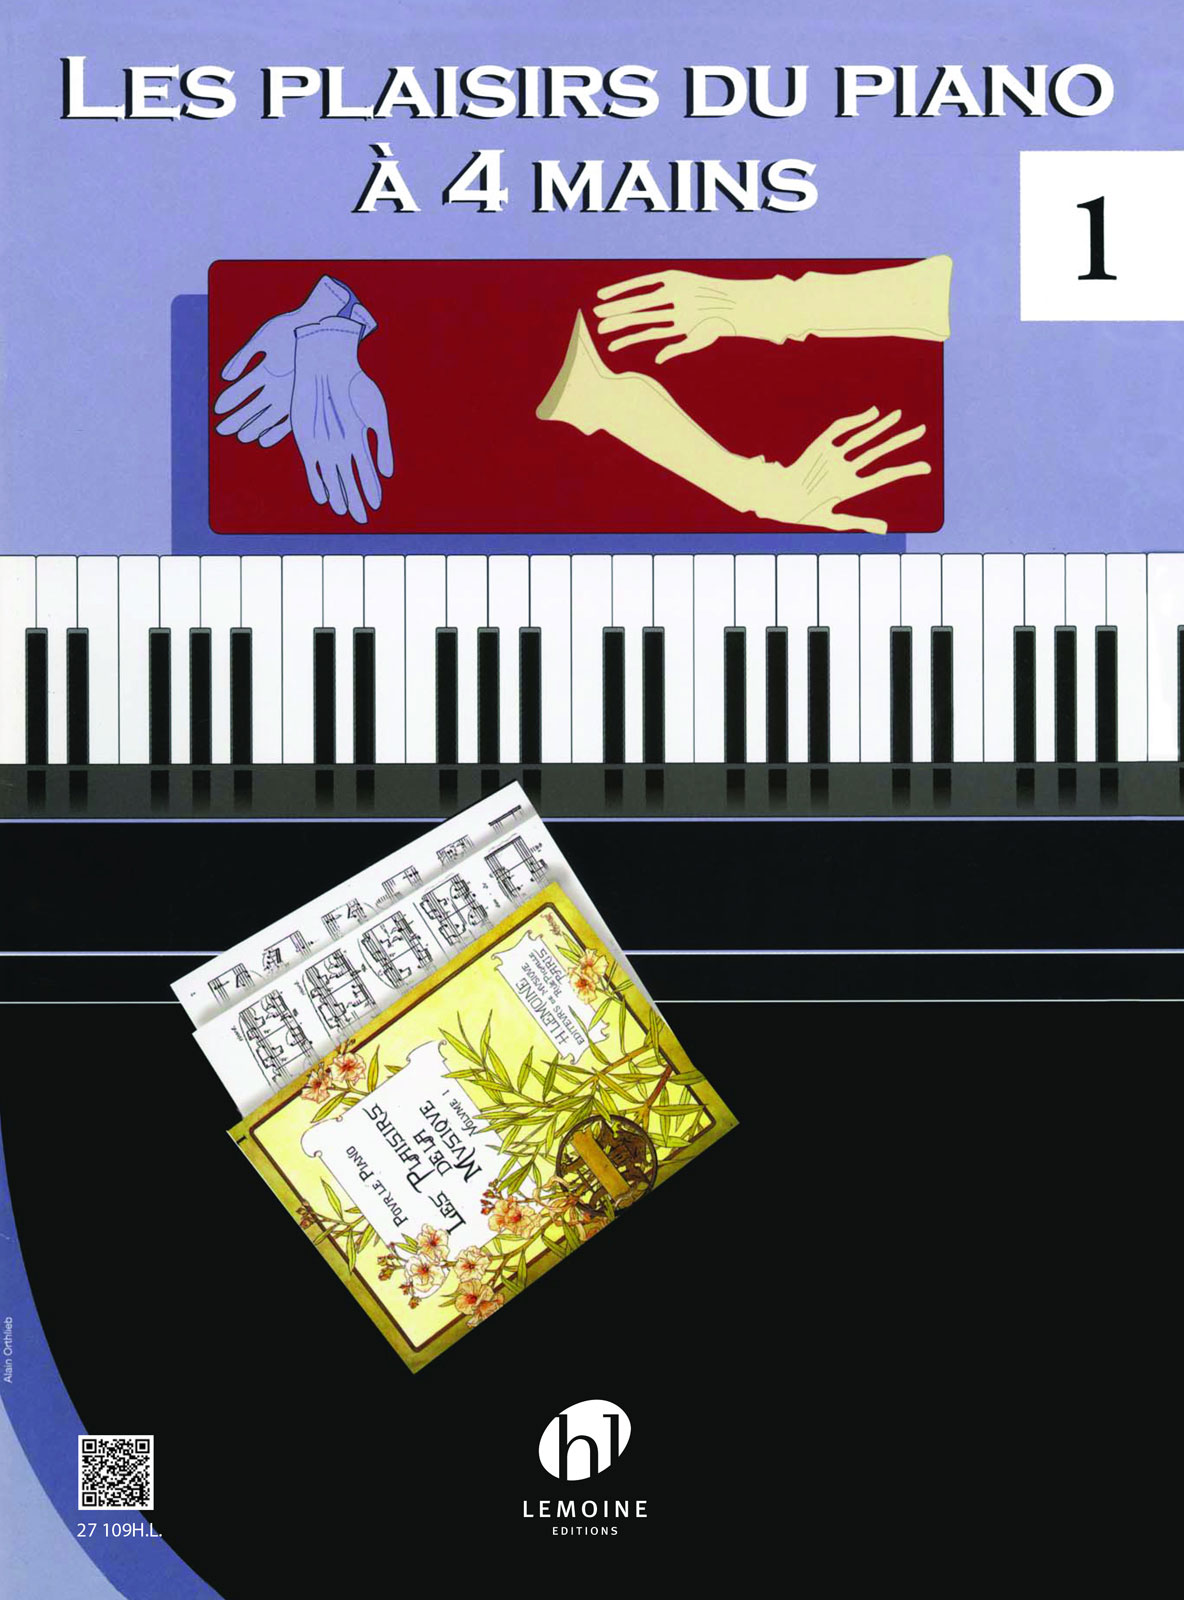 LEMOINE LES PLAISIRS DU PIANO A 4 MAINS VOL.1